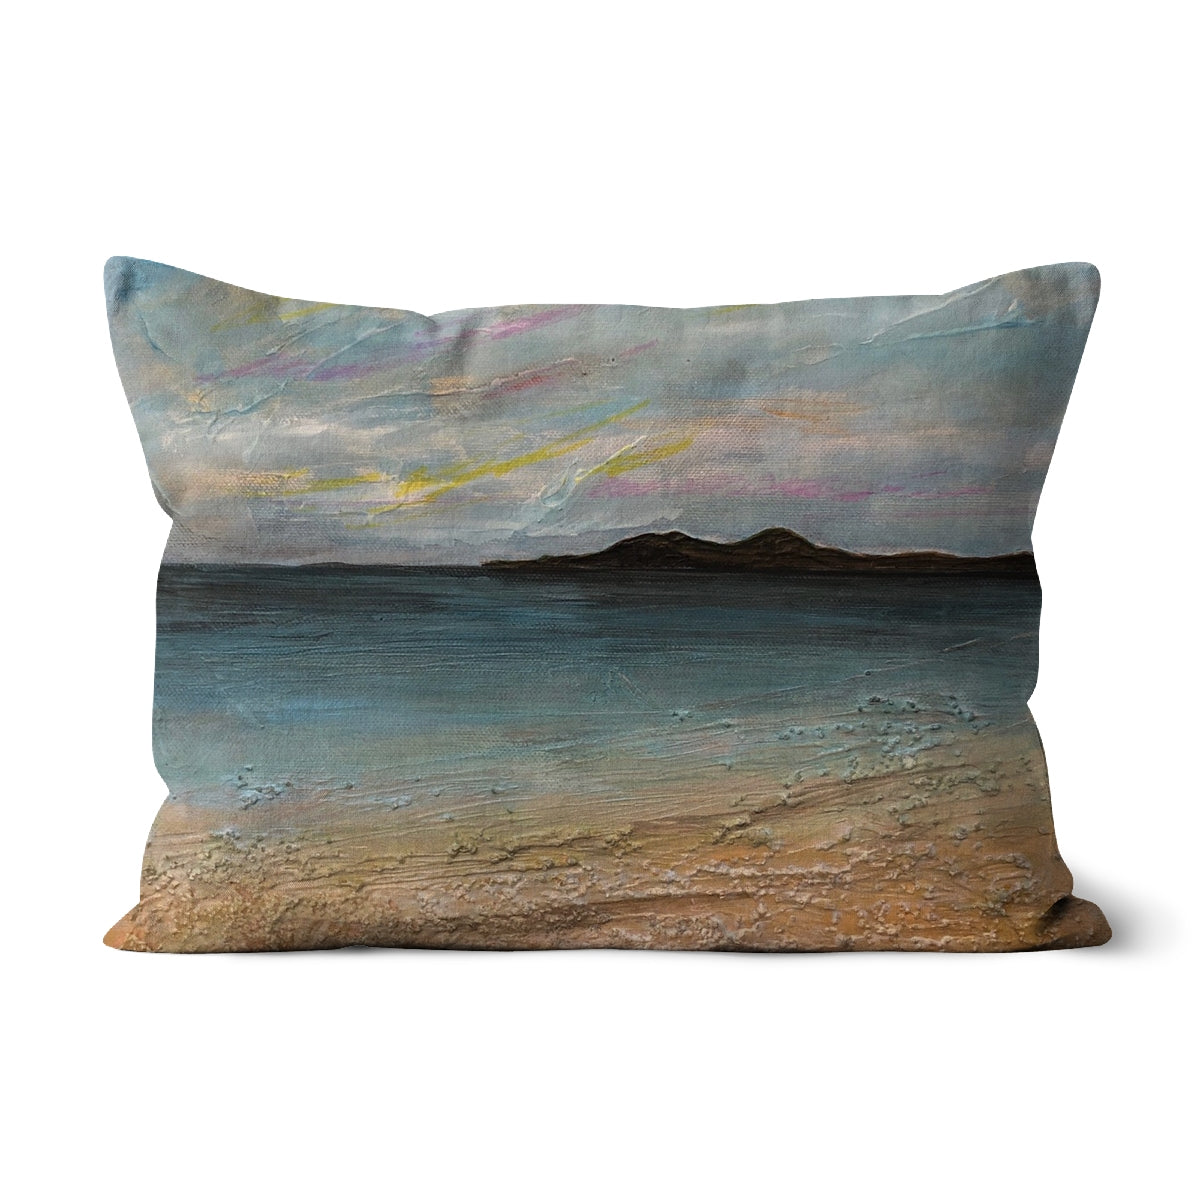 Garrynamonie Beach South Uist Art Gifts Cushion-Cushions-Hebridean Islands Art Gallery-Linen-19"x13"-Paintings, Prints, Homeware, Art Gifts From Scotland By Scottish Artist Kevin Hunter